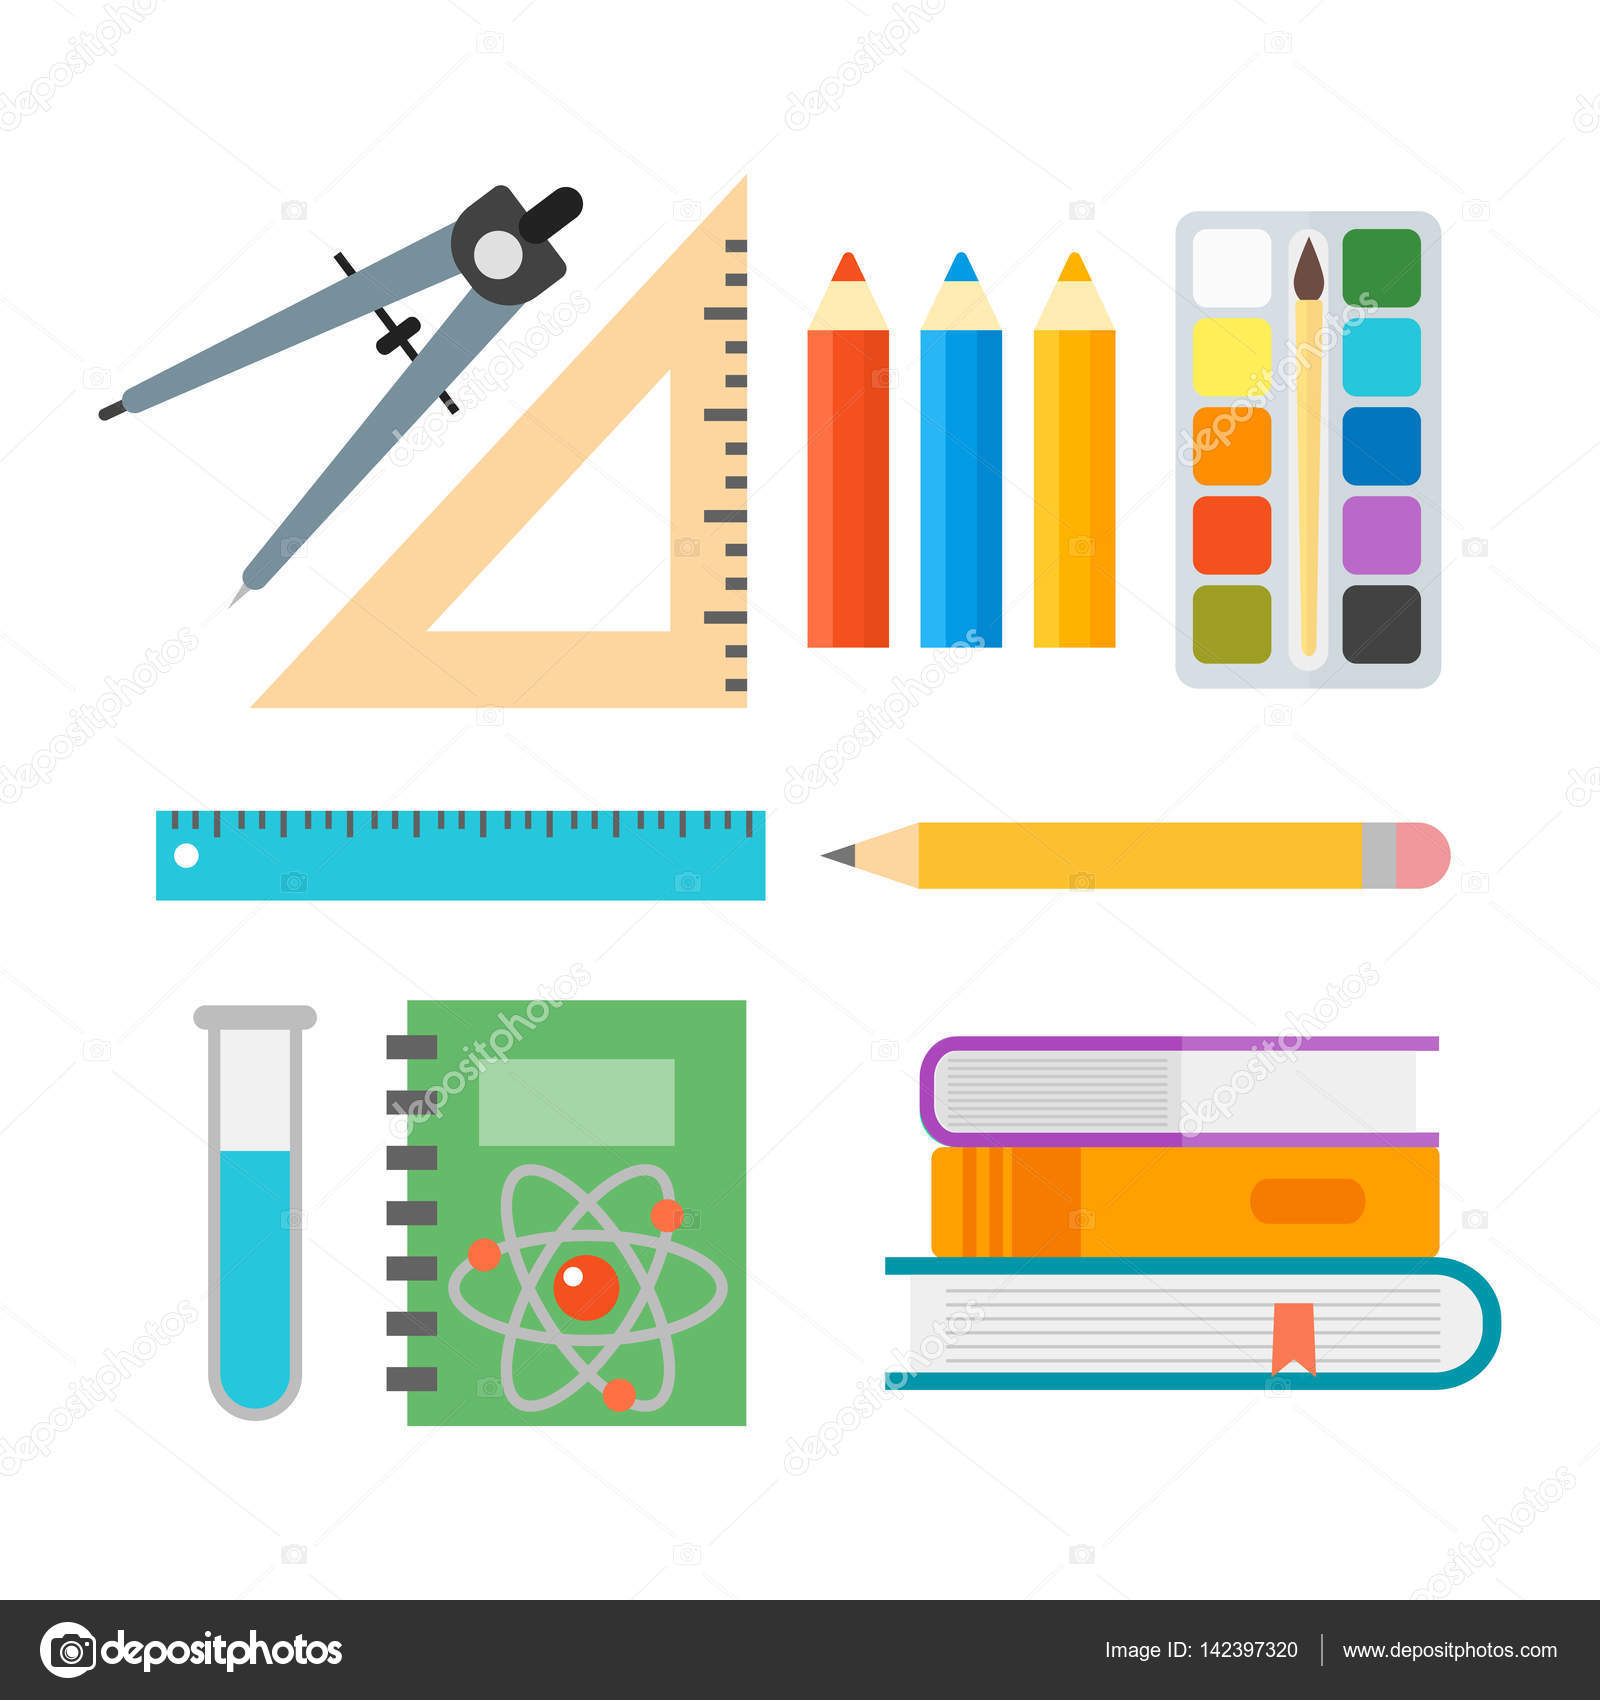 depositphotos_142397320-stock-illustration-school-supplies-stationery-equipment-vector.jpg